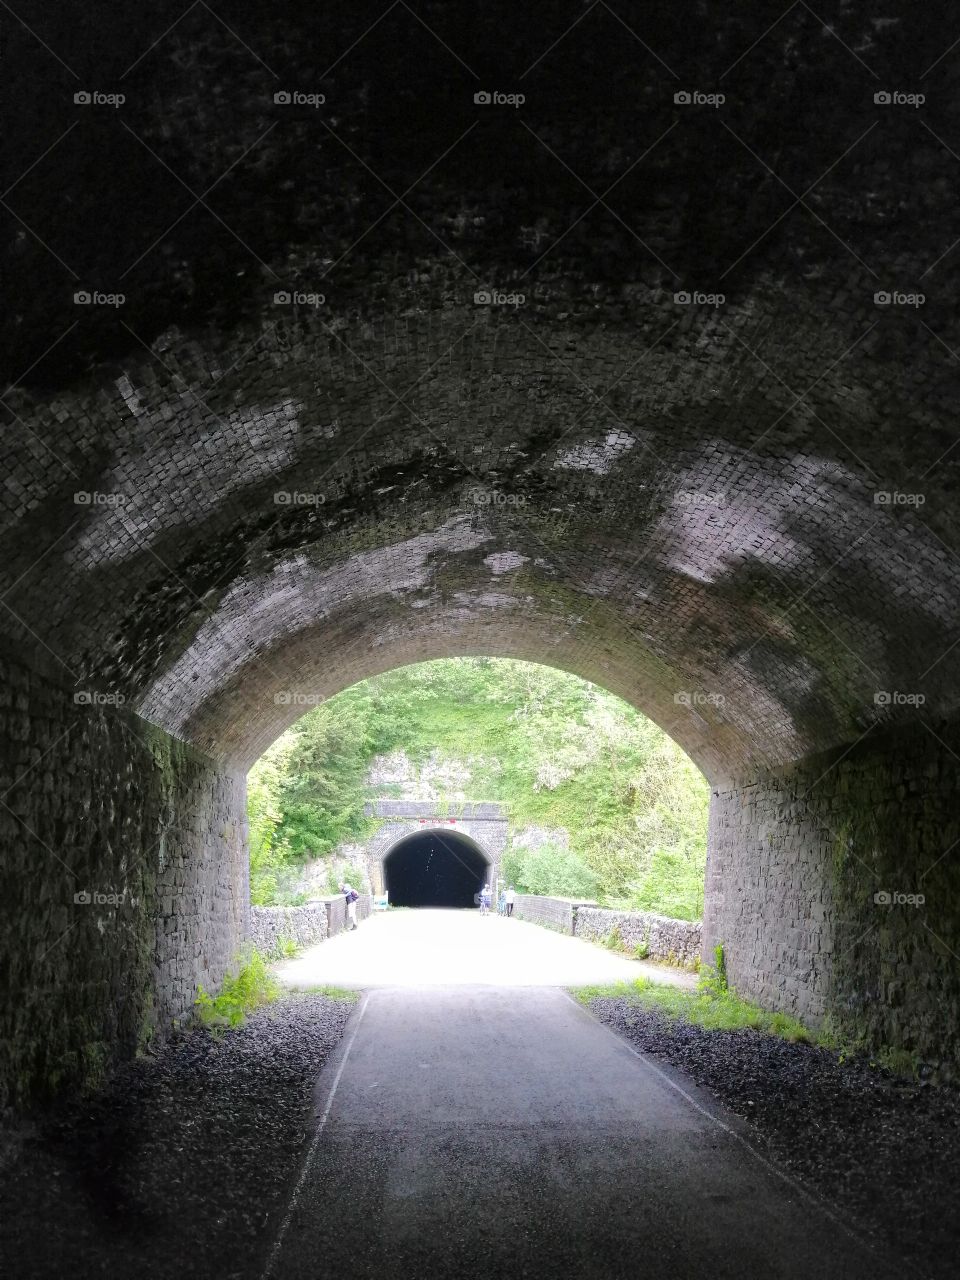 Disused train tunnels